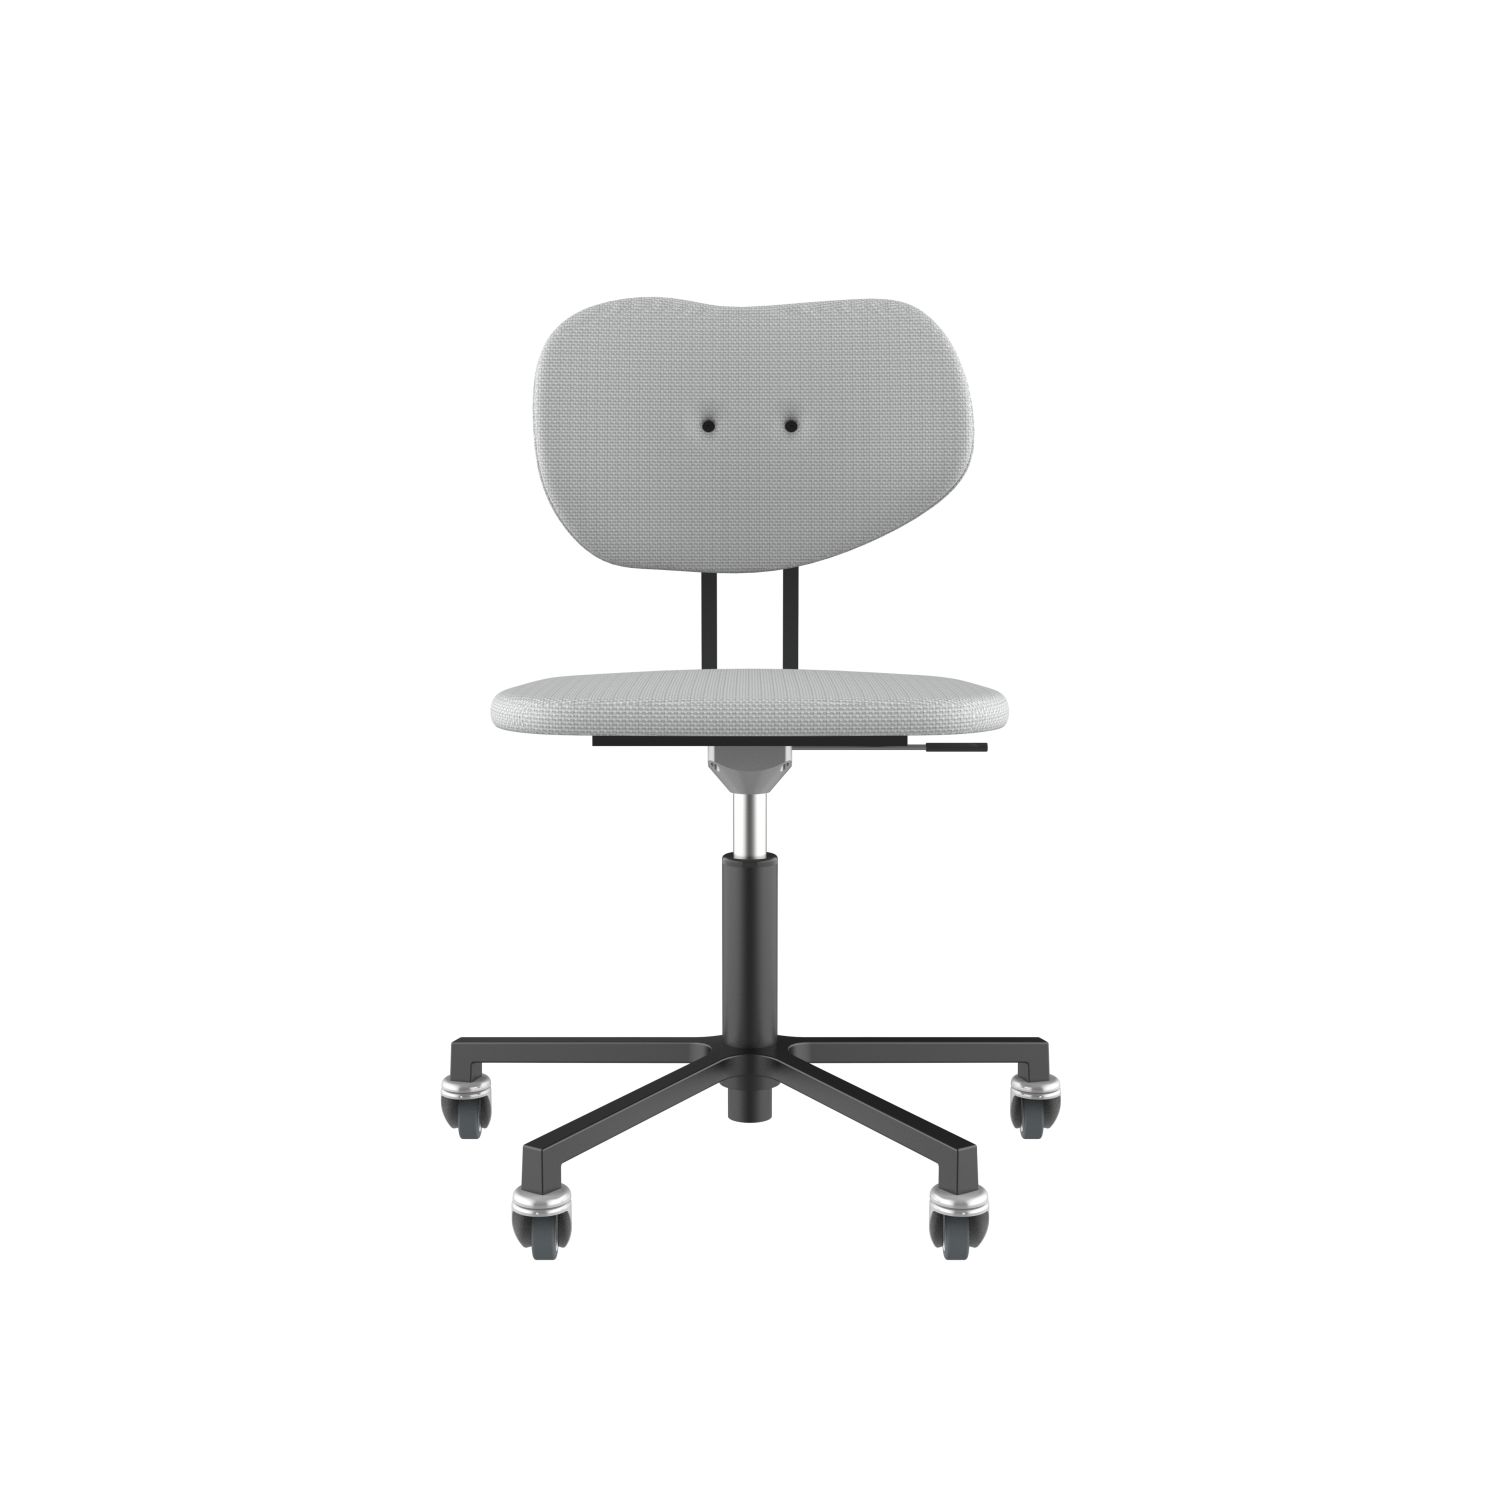 lensvelt maarten baas office chair without armrests backrest b breeze light grey 171 black ral9005 soft wheels